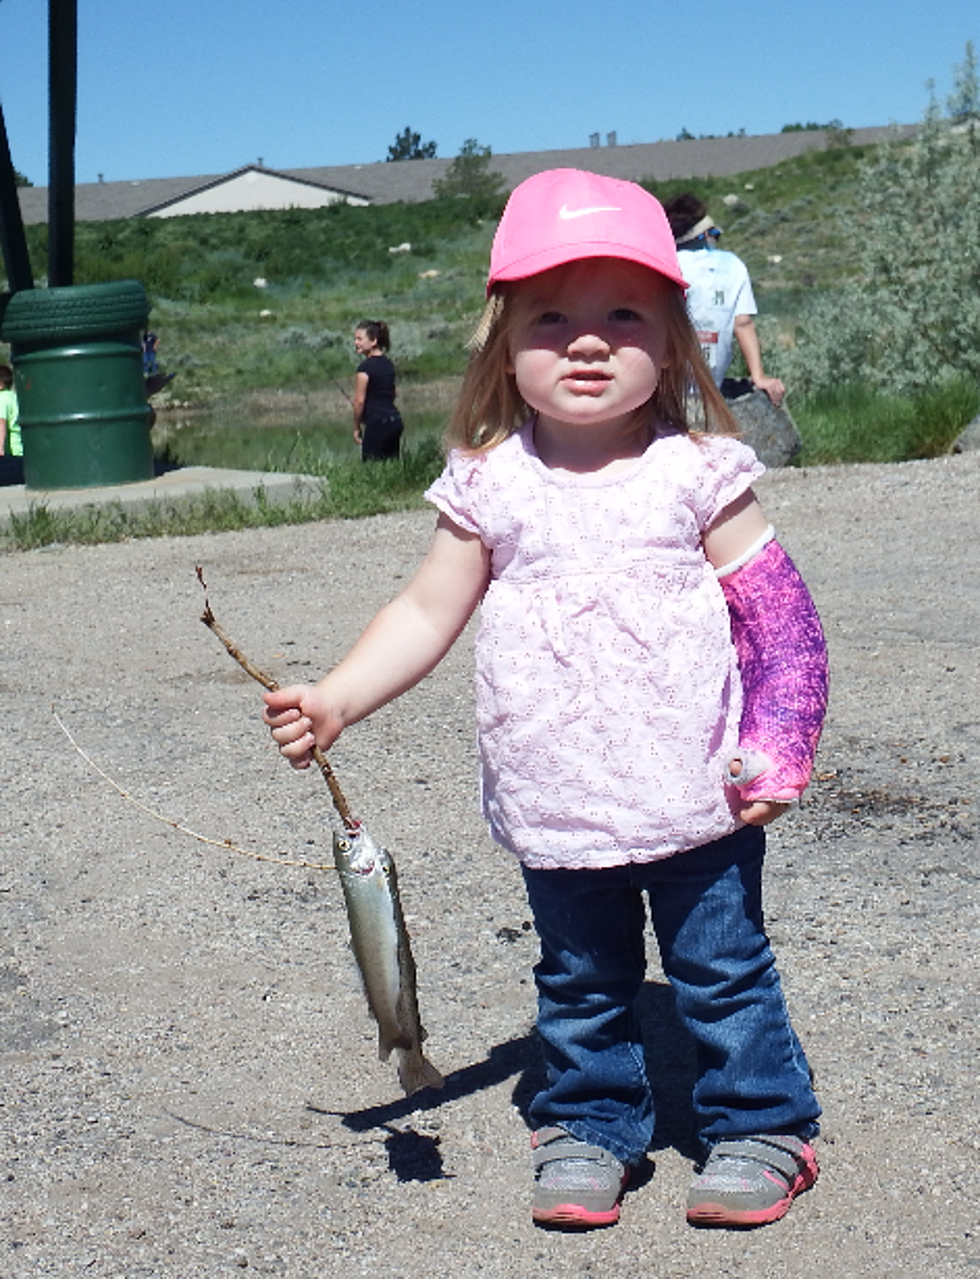 Casper Kids’ Fishing Day is Saturday, June 2nd